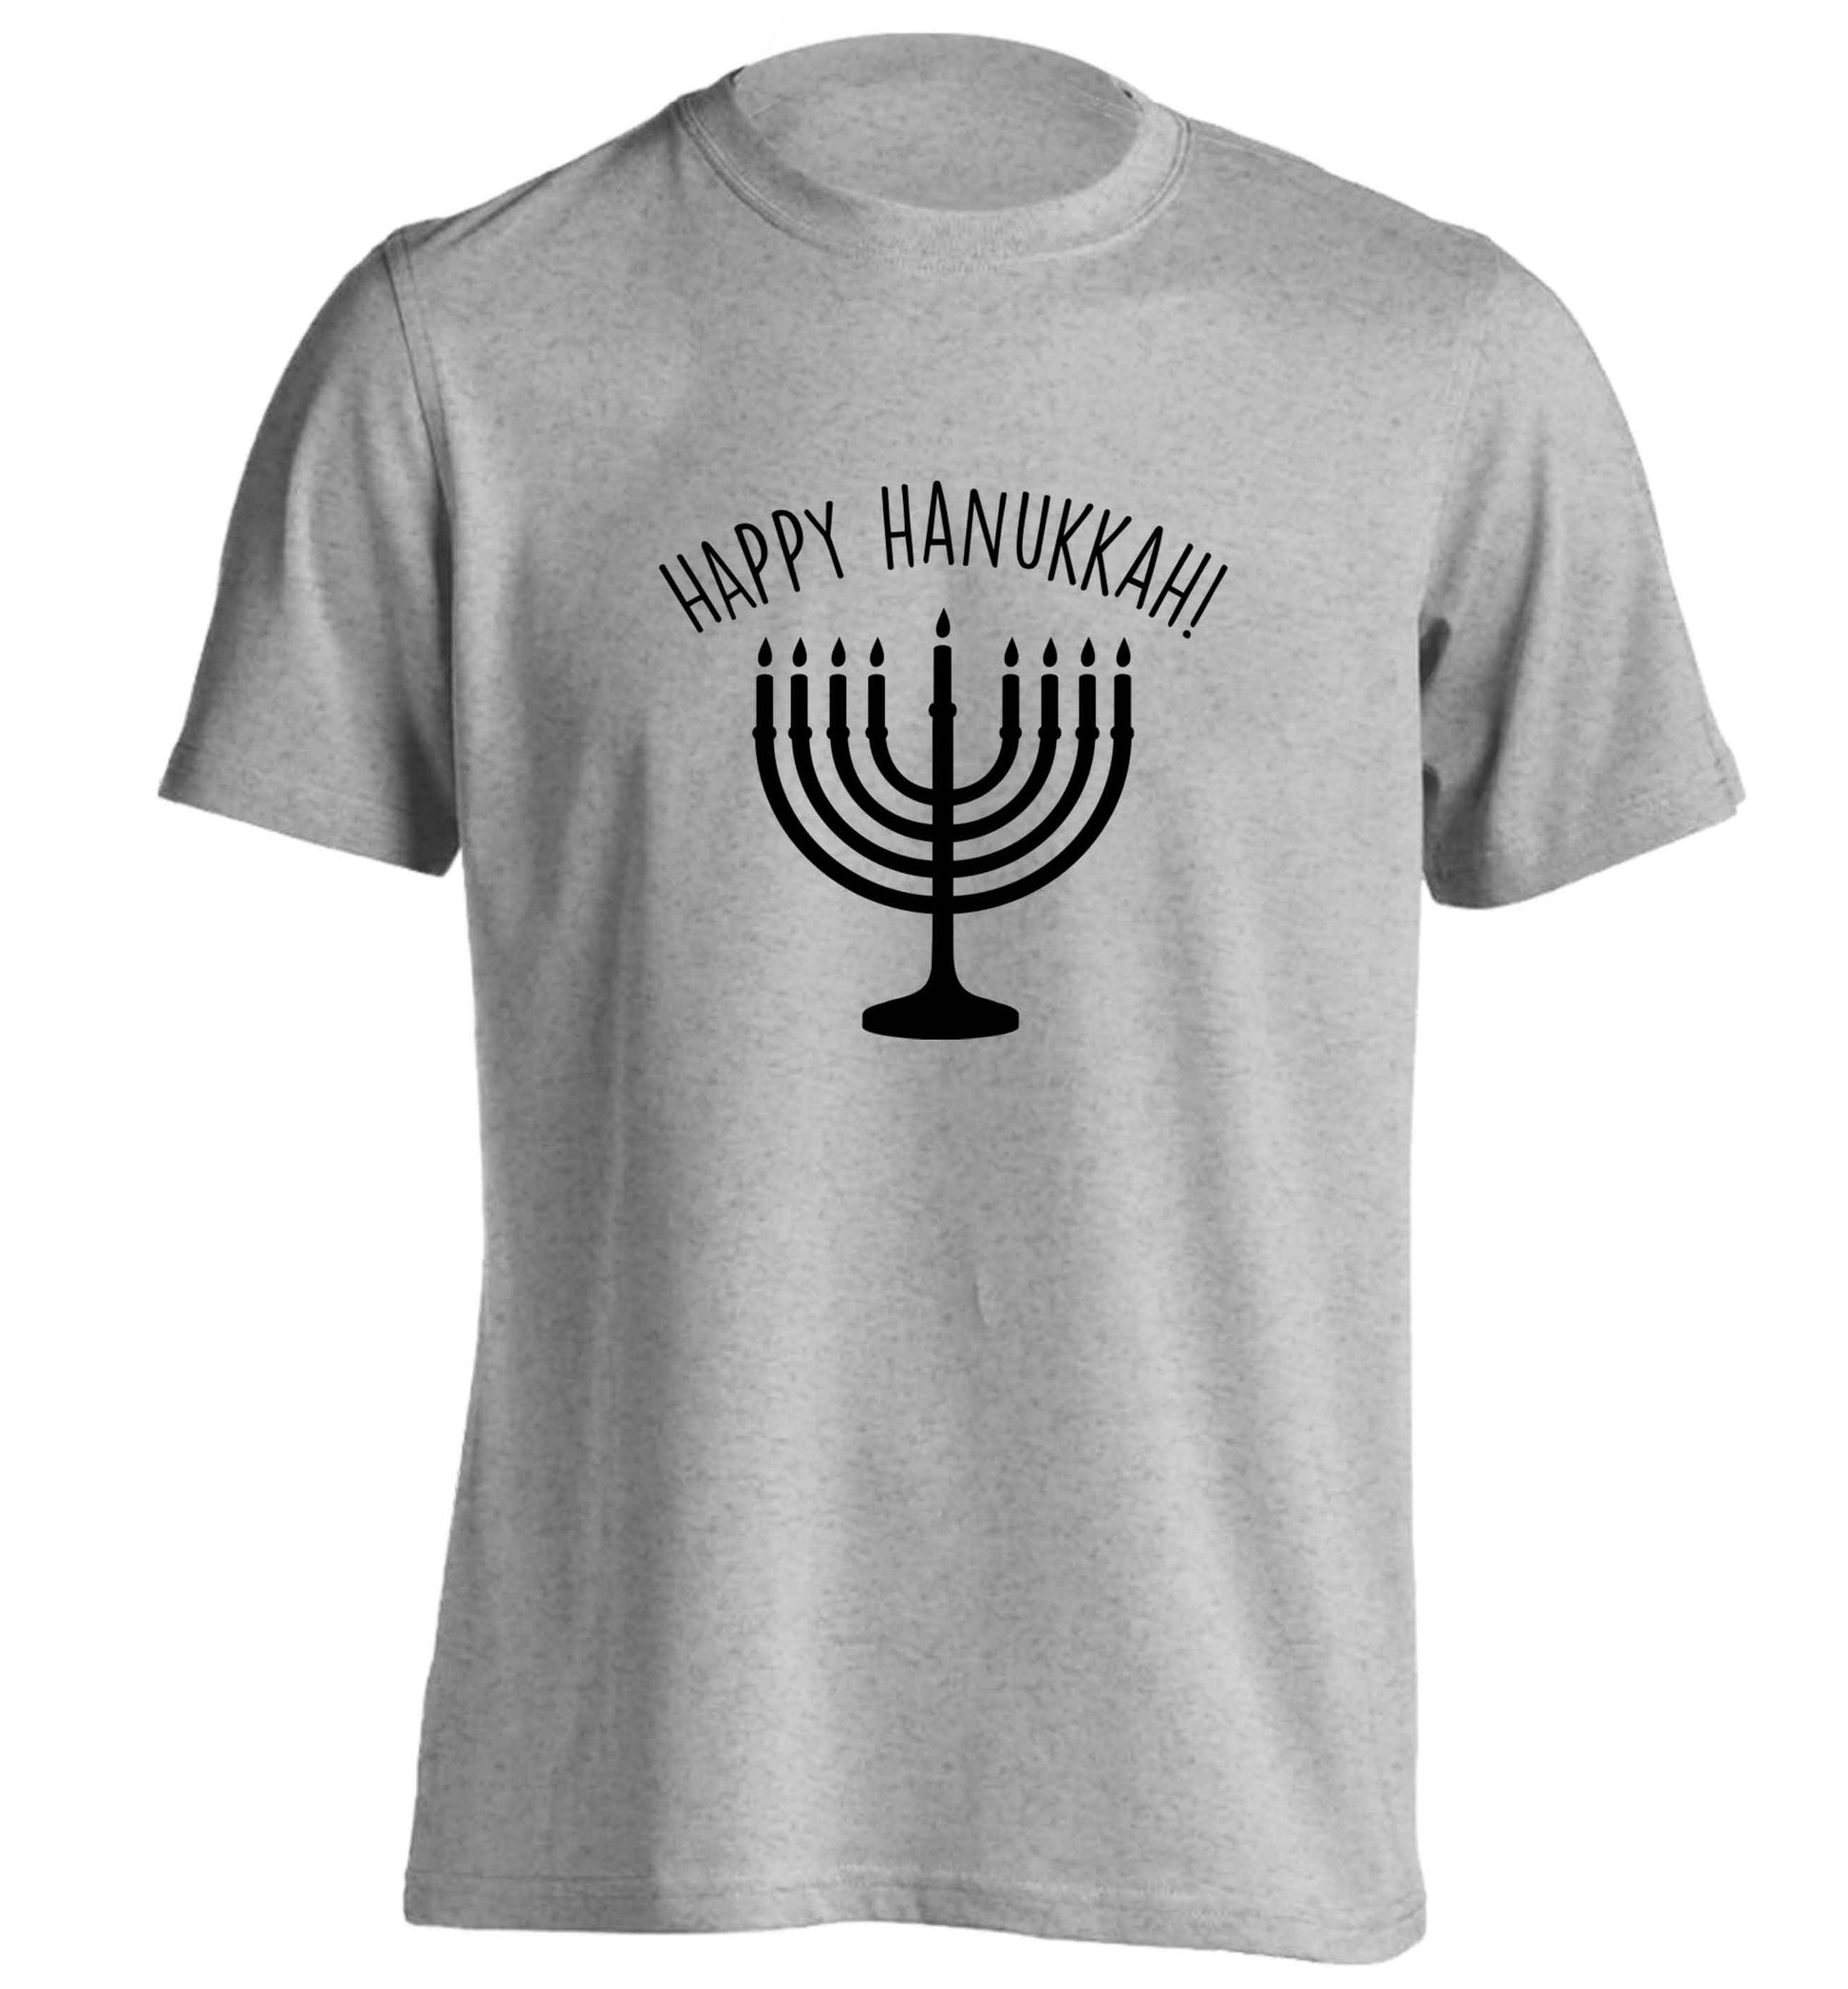 Happy hanukkah adults unisex grey Tshirt 2XL